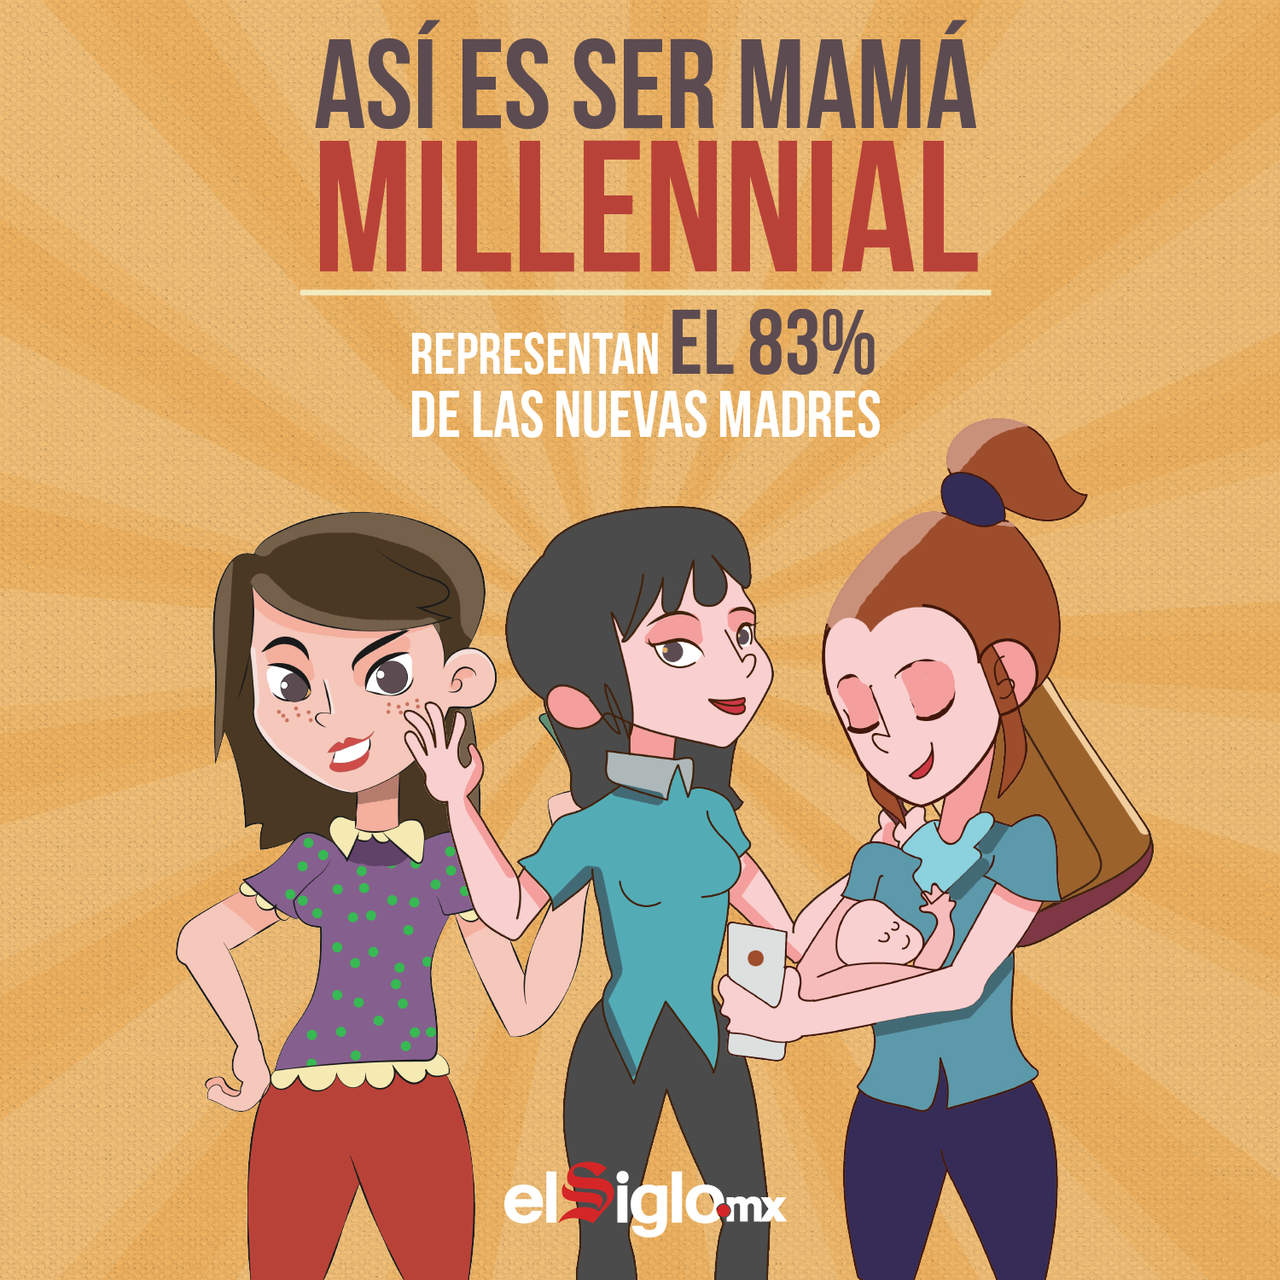 Así son las madres millennials